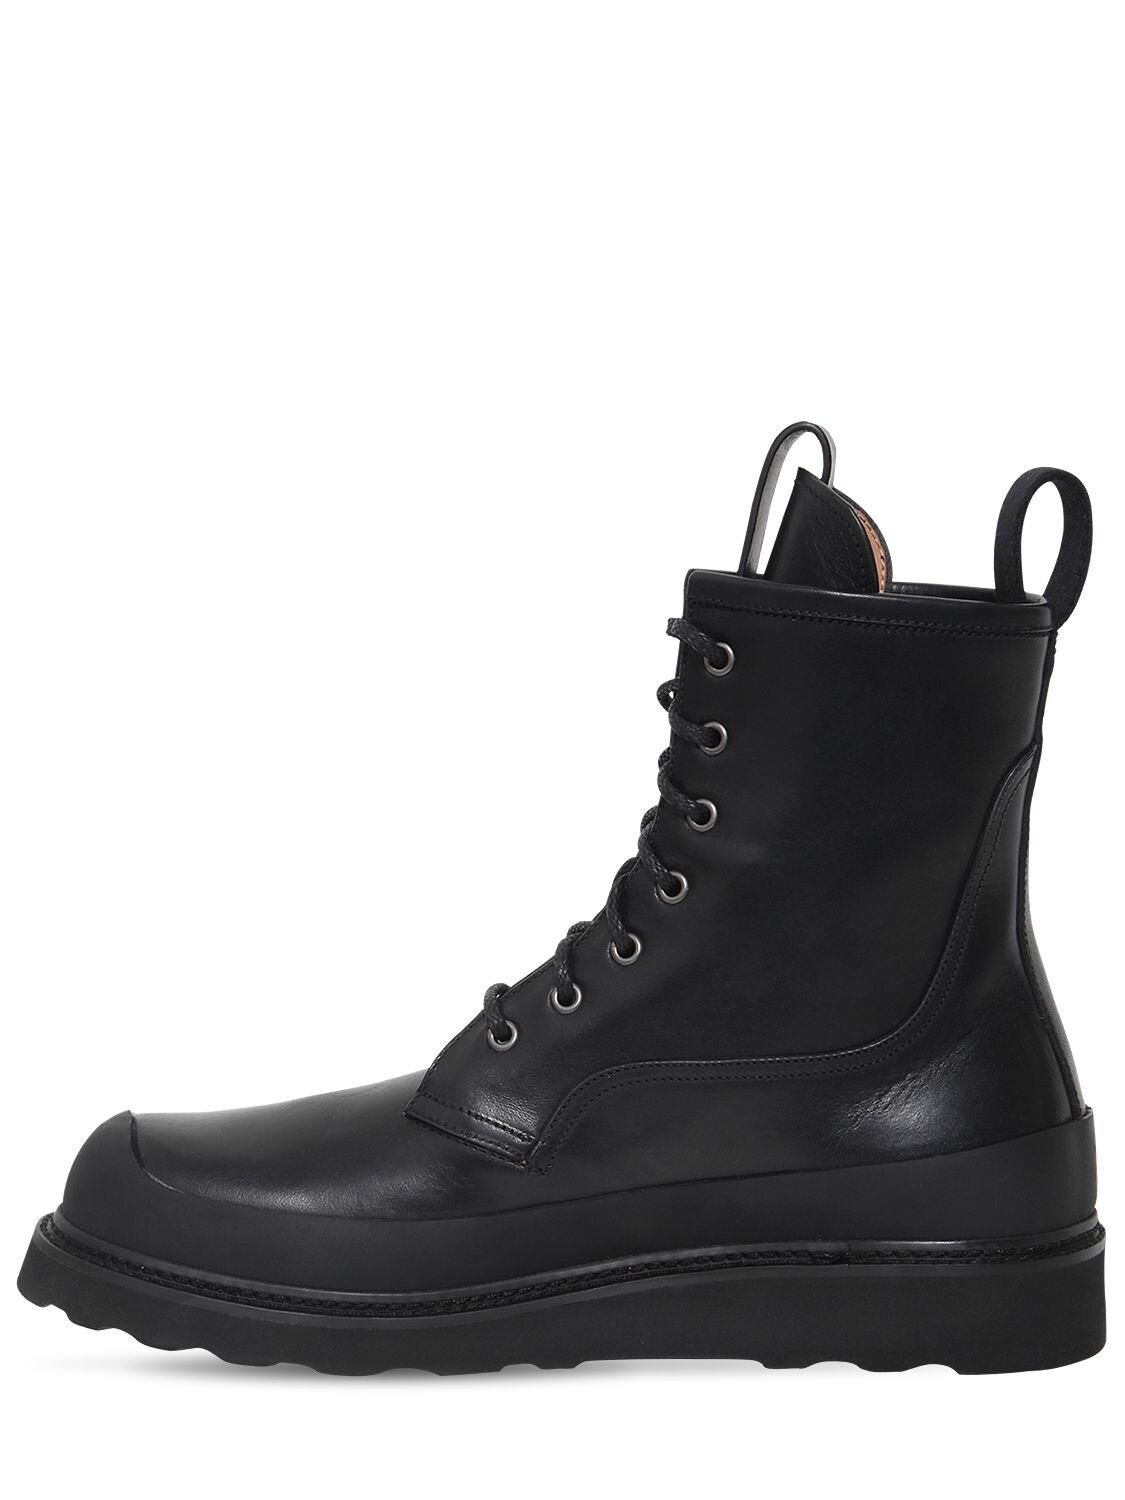 Bottega Veneta Leather Lace-up Work Boots in Black for Men - Lyst